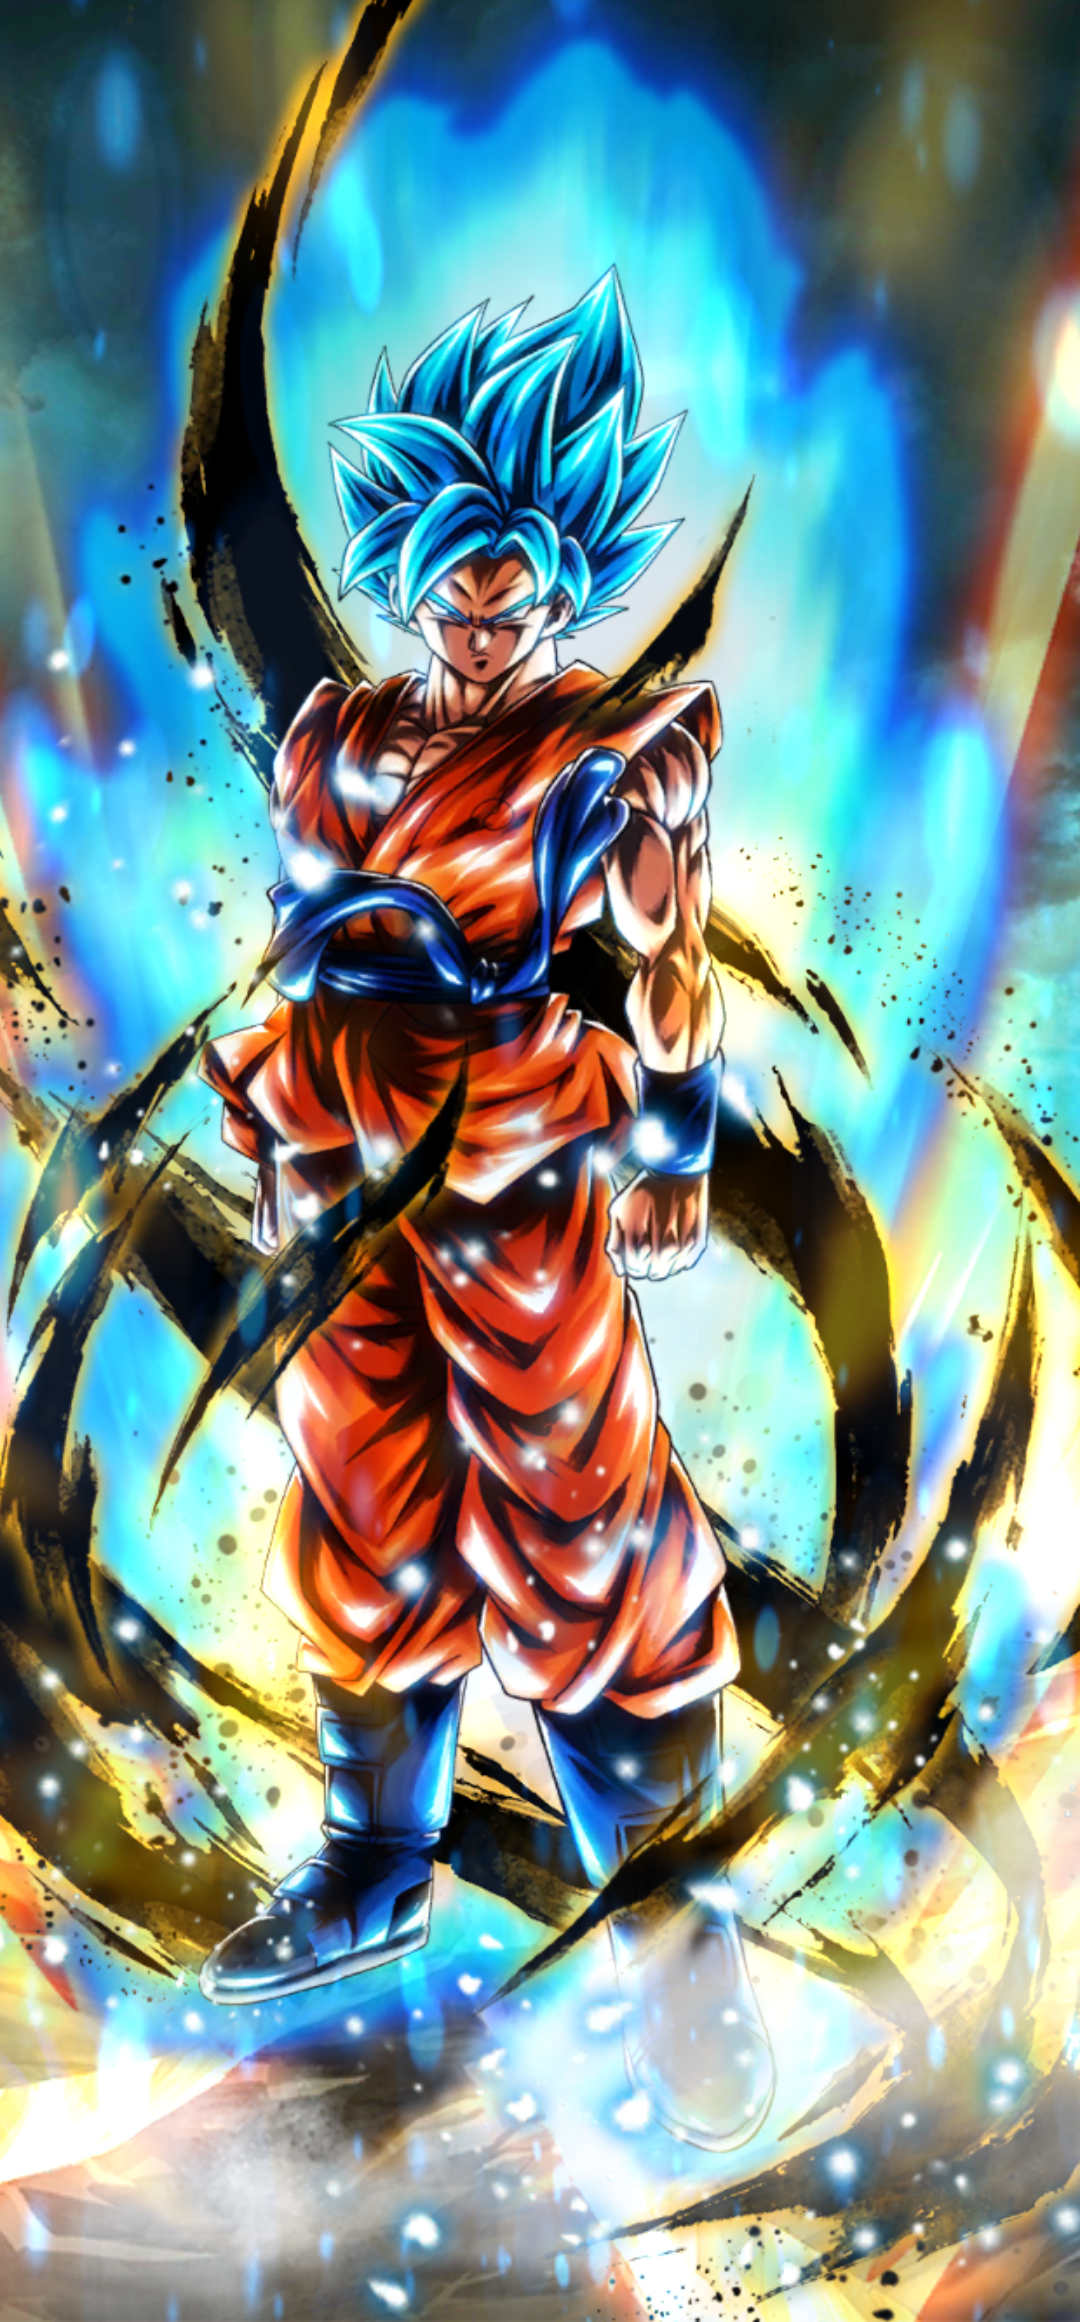 Super Saiyan God Goku (Dragonball Legends) - Wallpaper